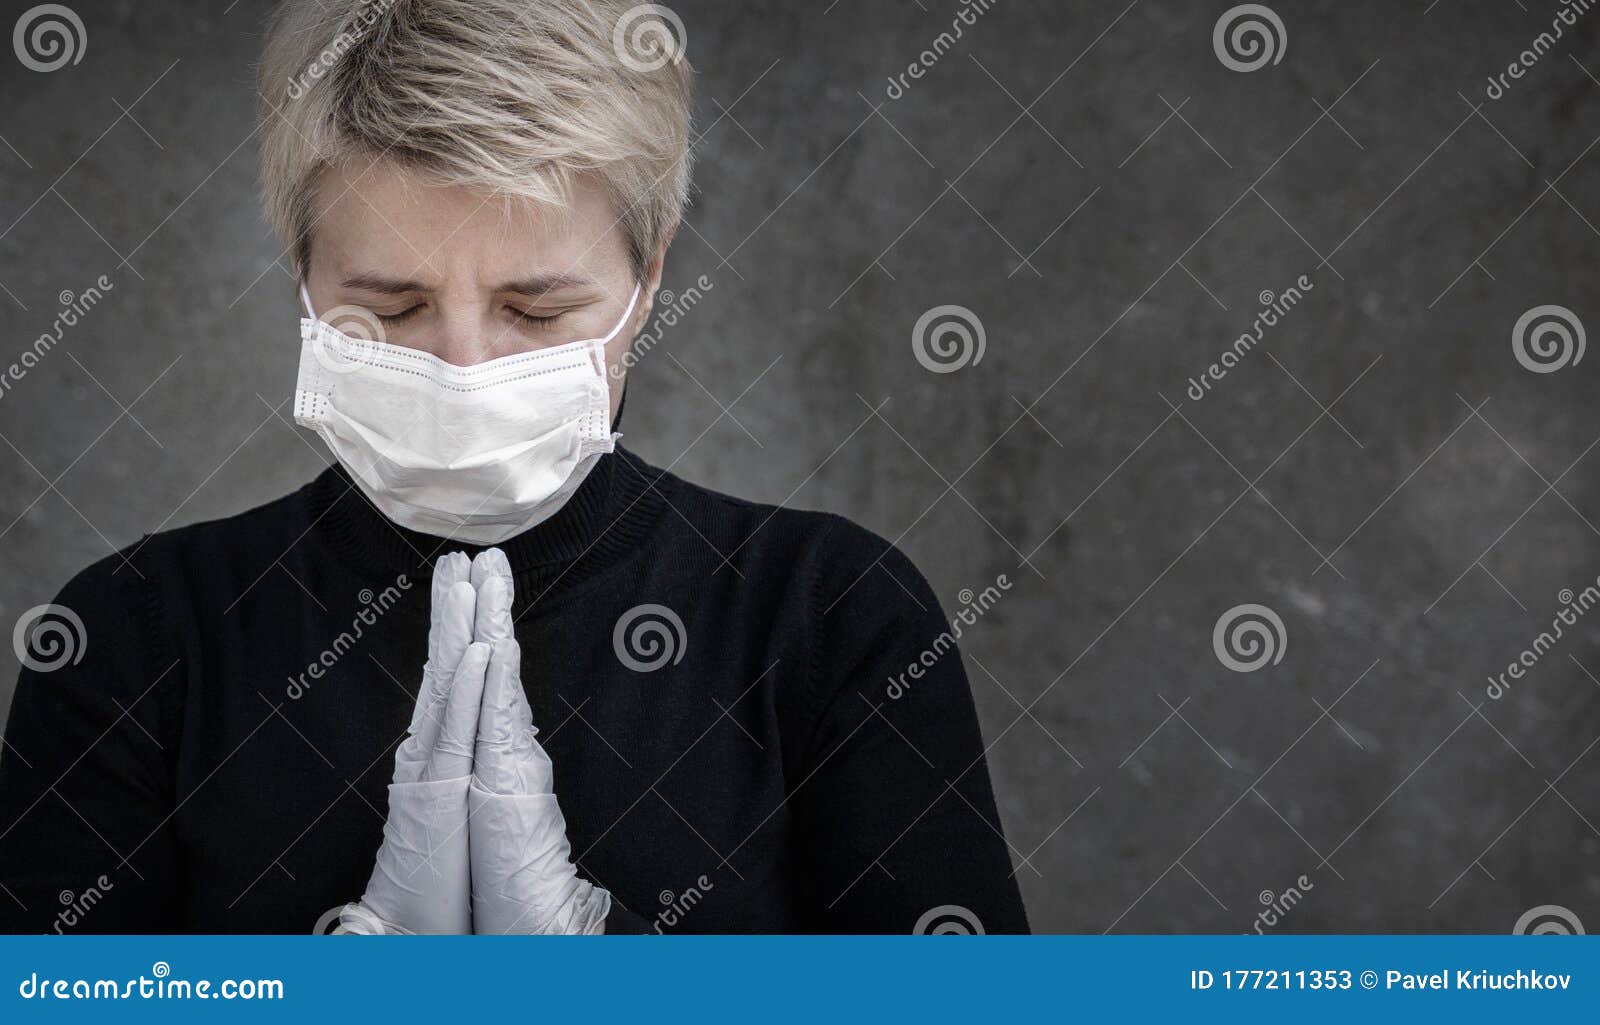 closeup portrait of a sad woman in medical mask outdoors. prayer